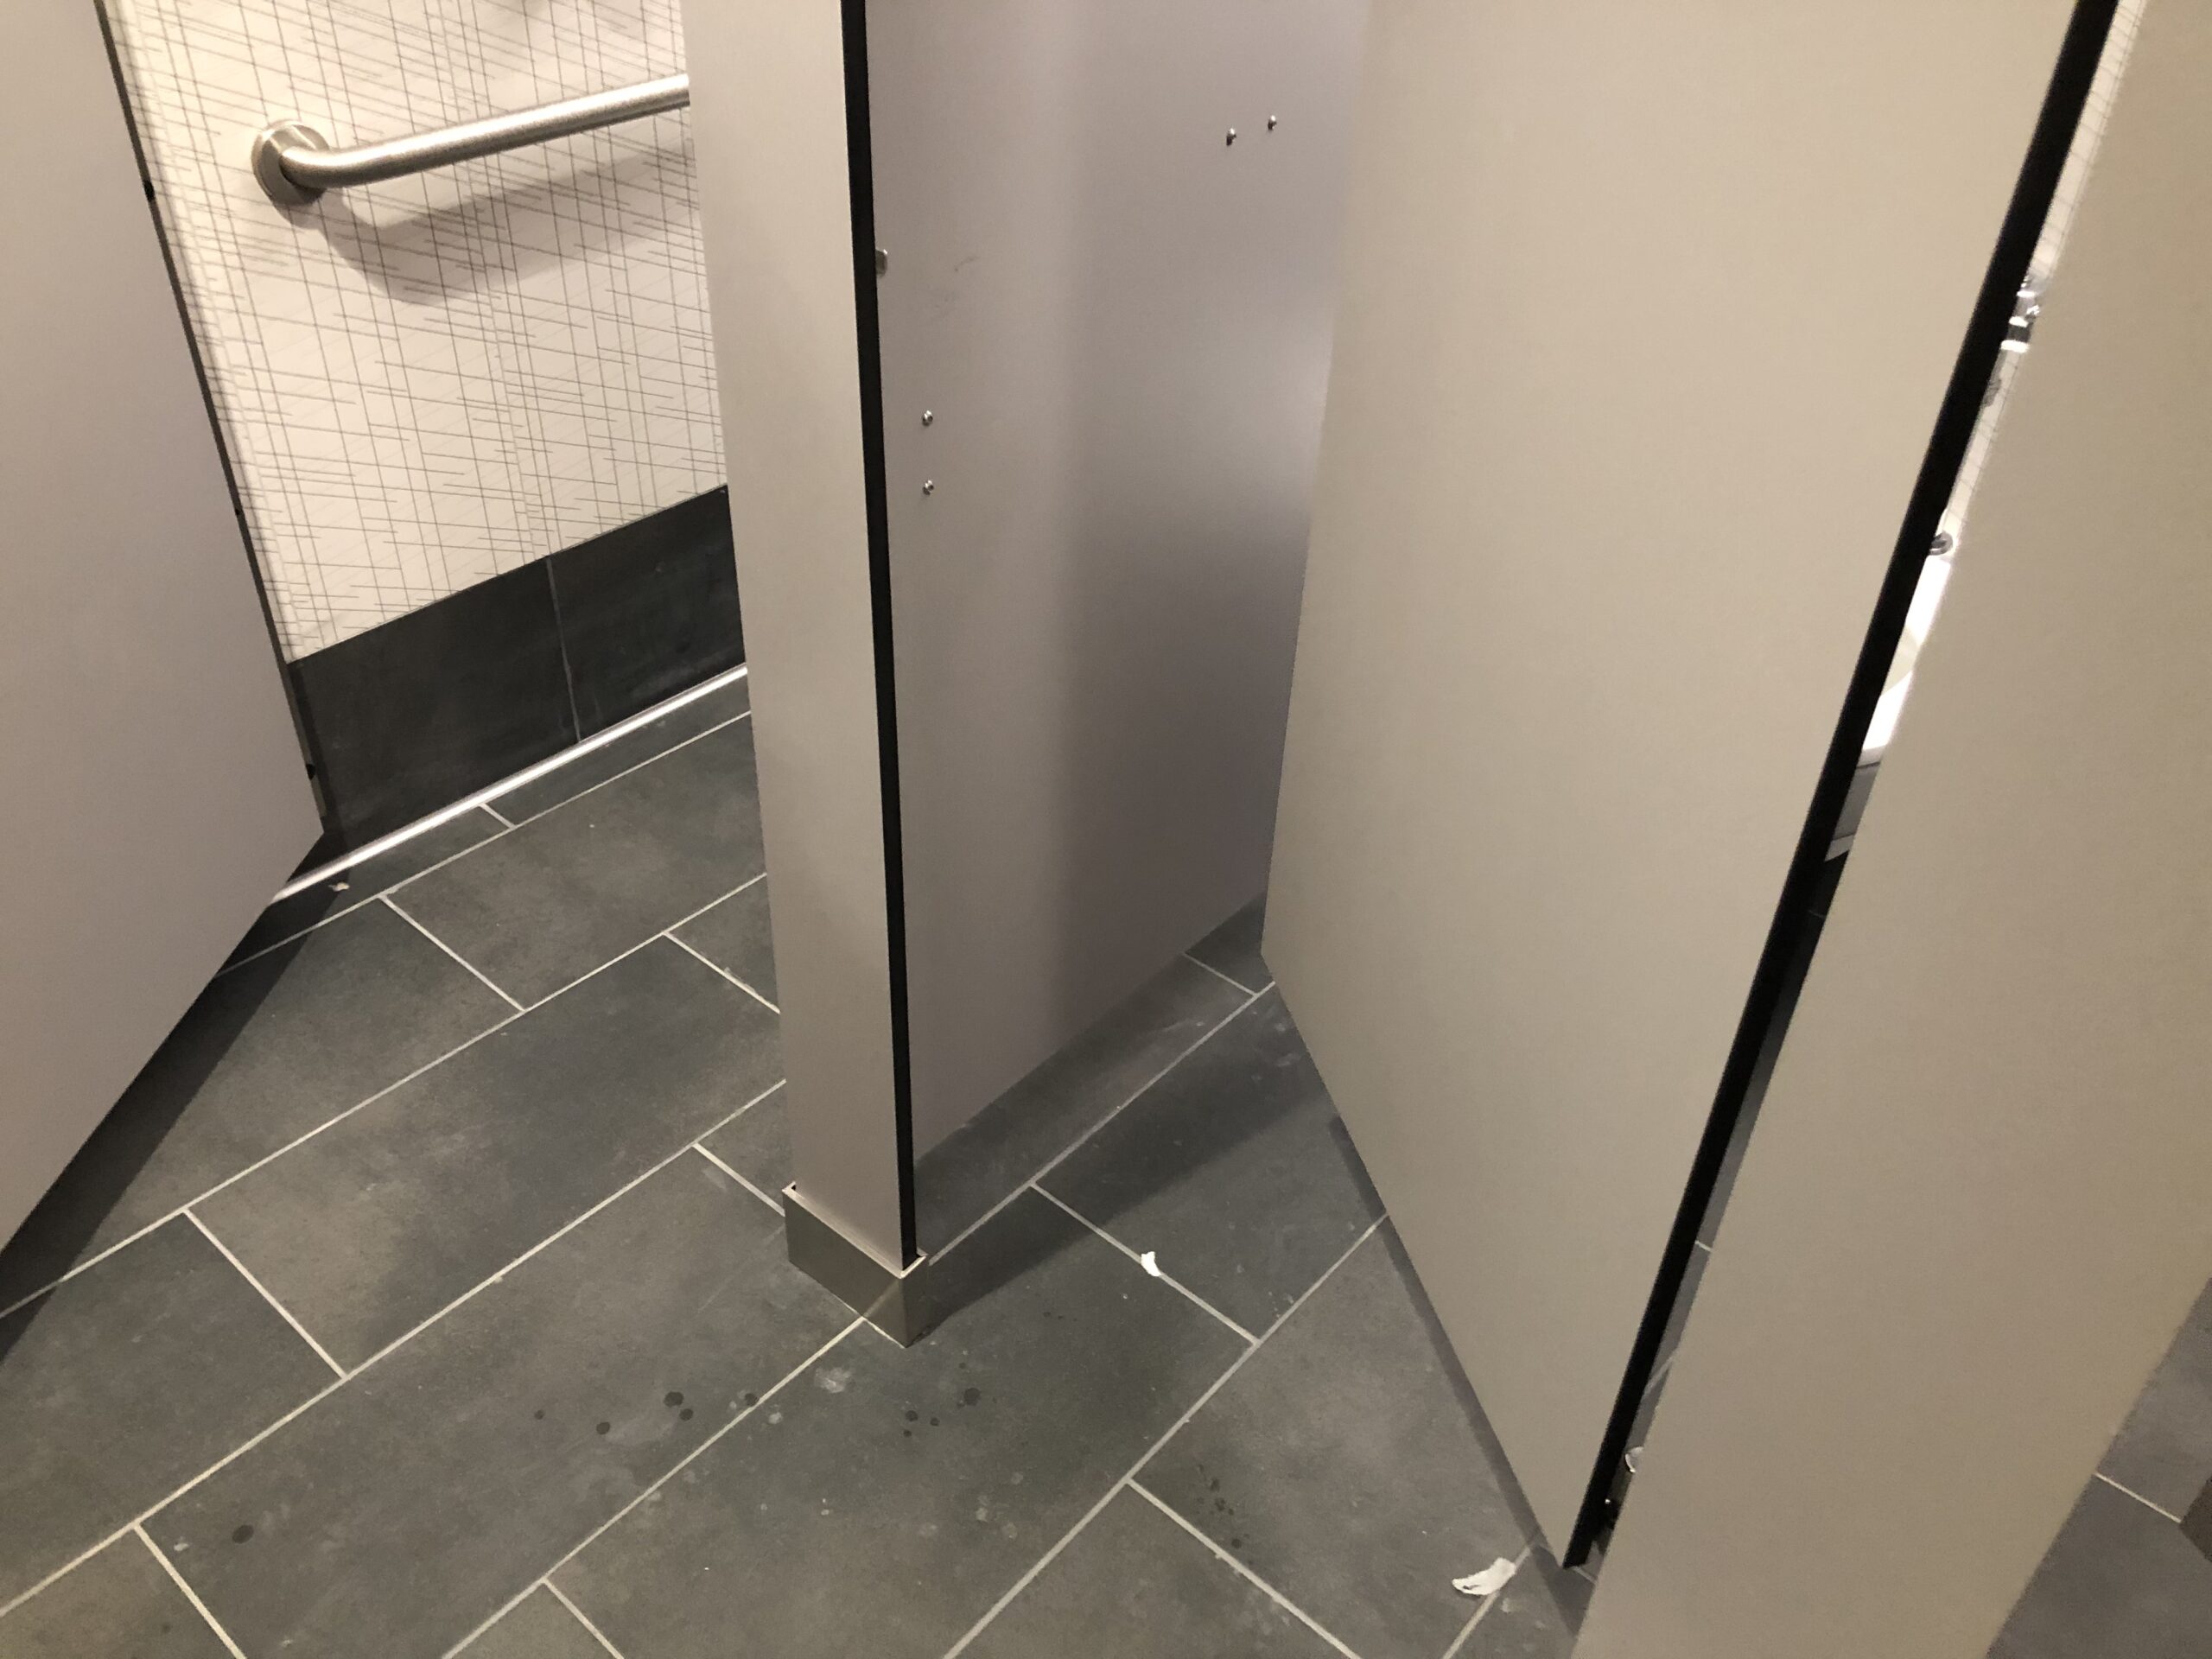 Bryant-Denny Stadium Bathroom Floor